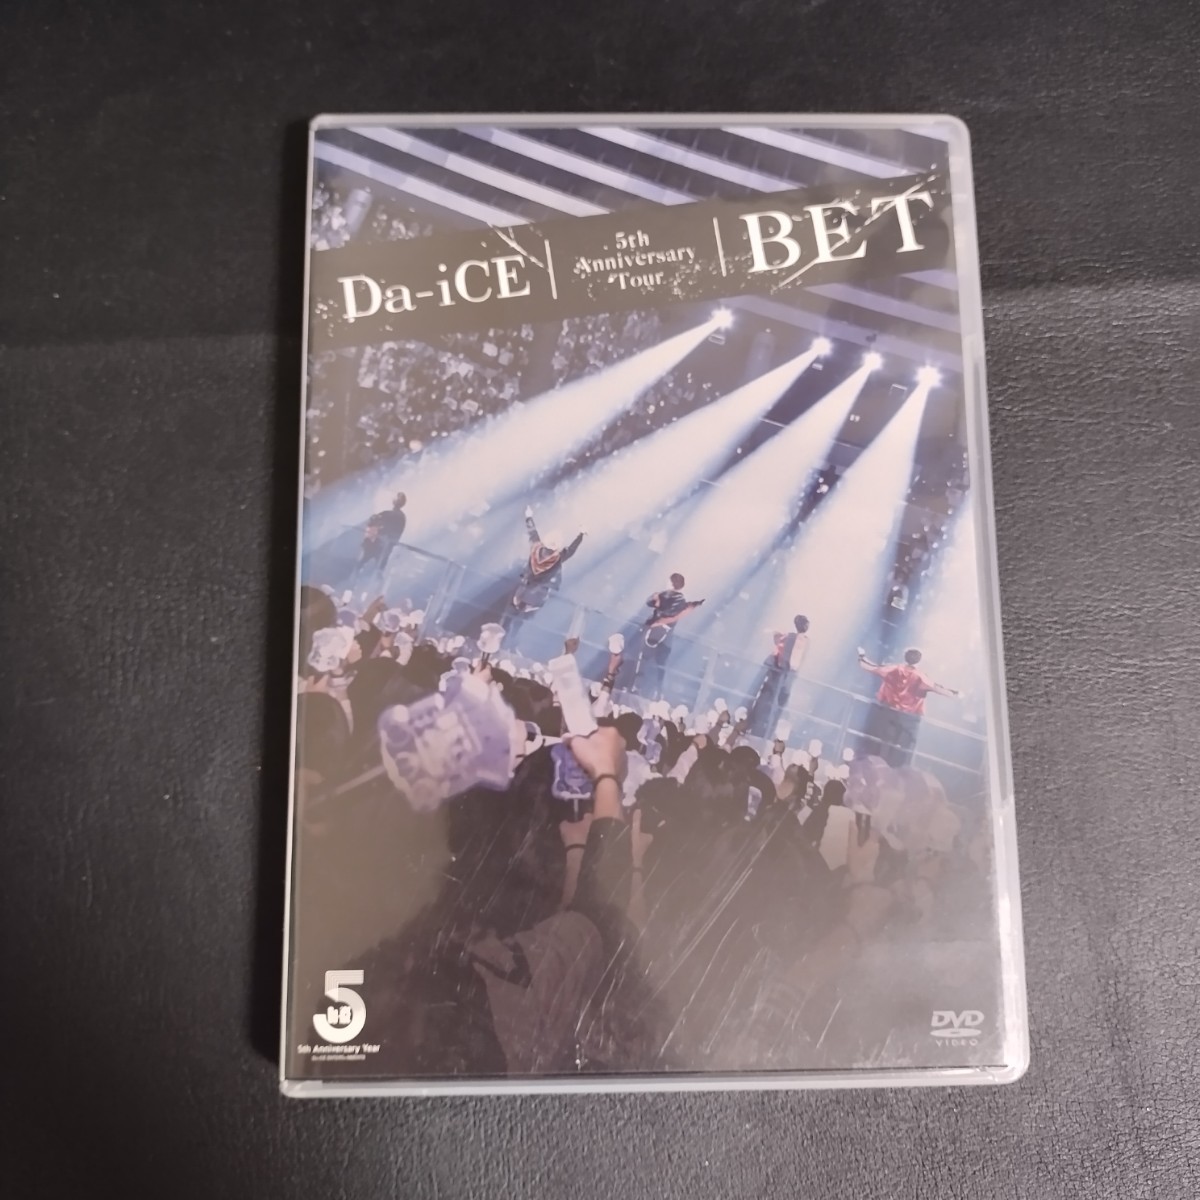 【Da-iCE】ダイス Da-iCE 5th Anniversary Tour-BET- 邦楽DVD 2枚組 2019年_画像1